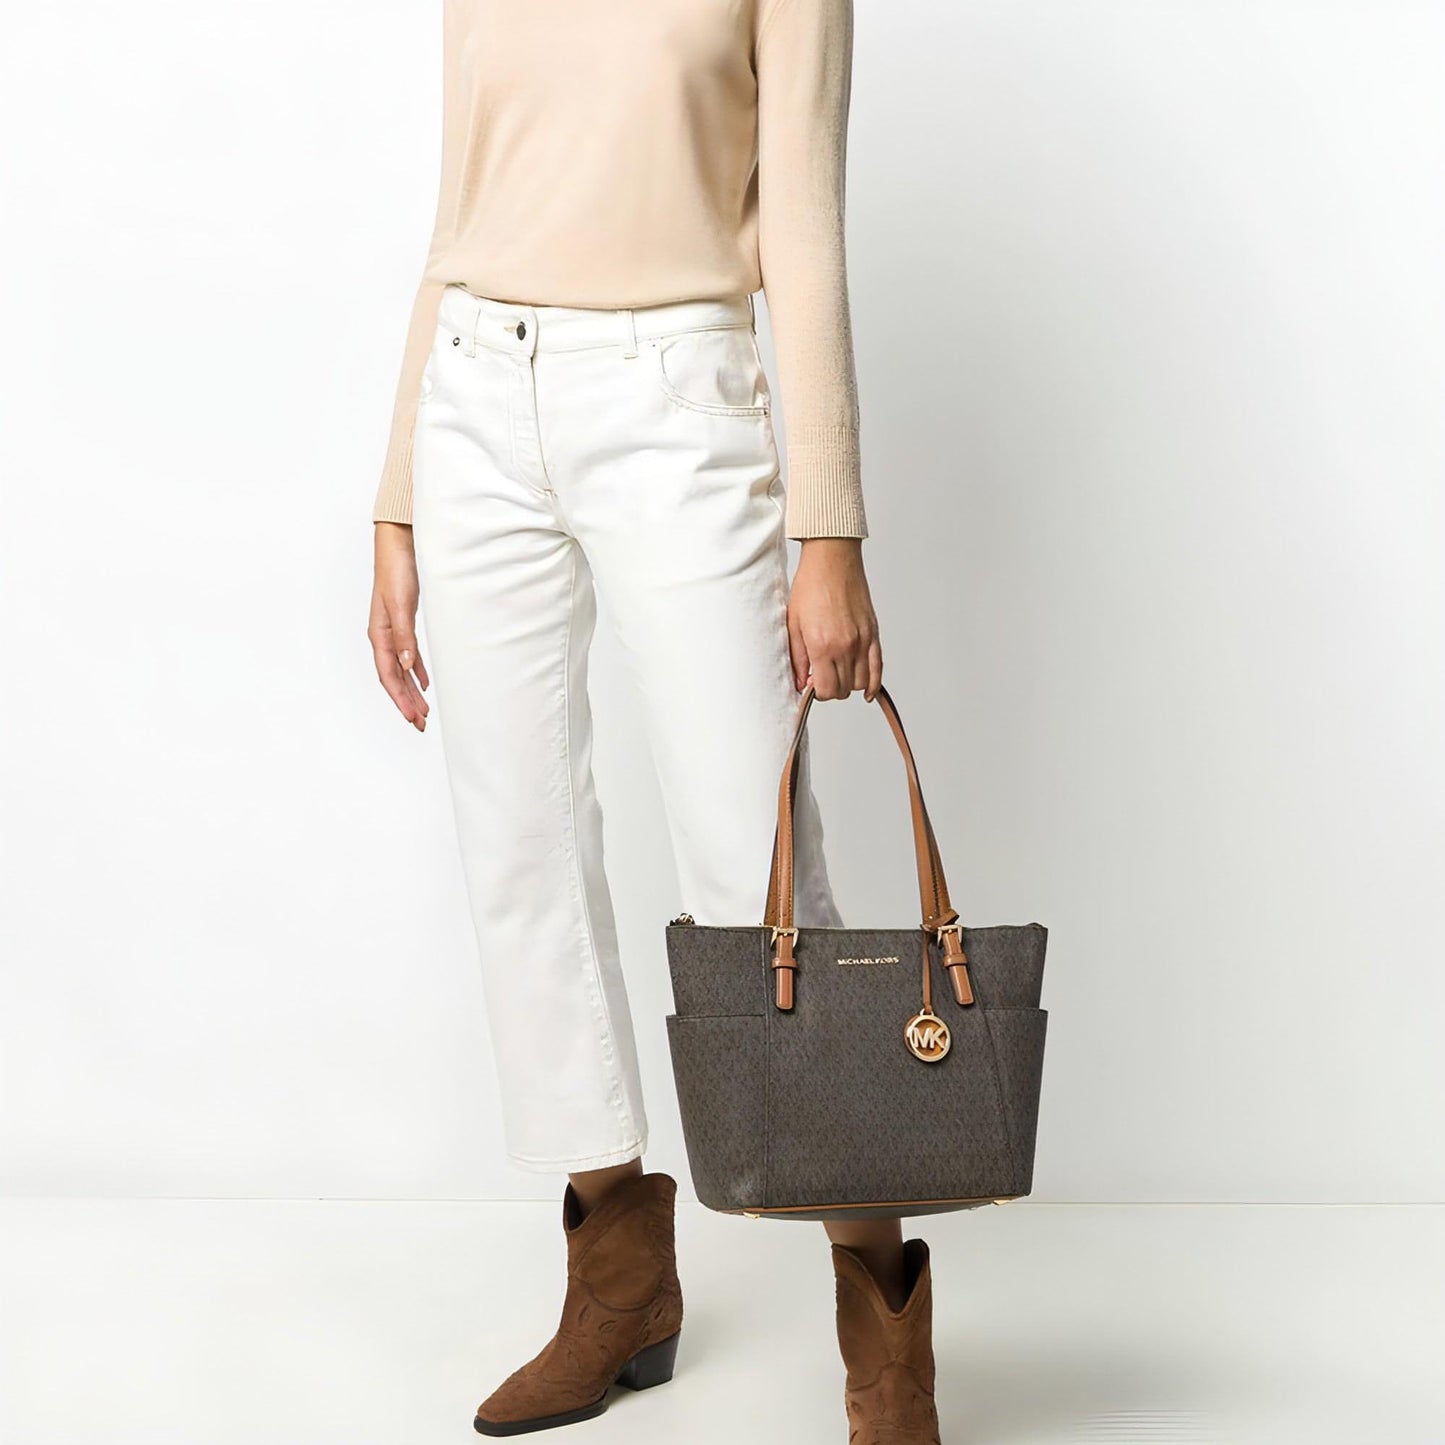 MICHAEL KORS moteriška ruda rankinė Top-zip tote bag